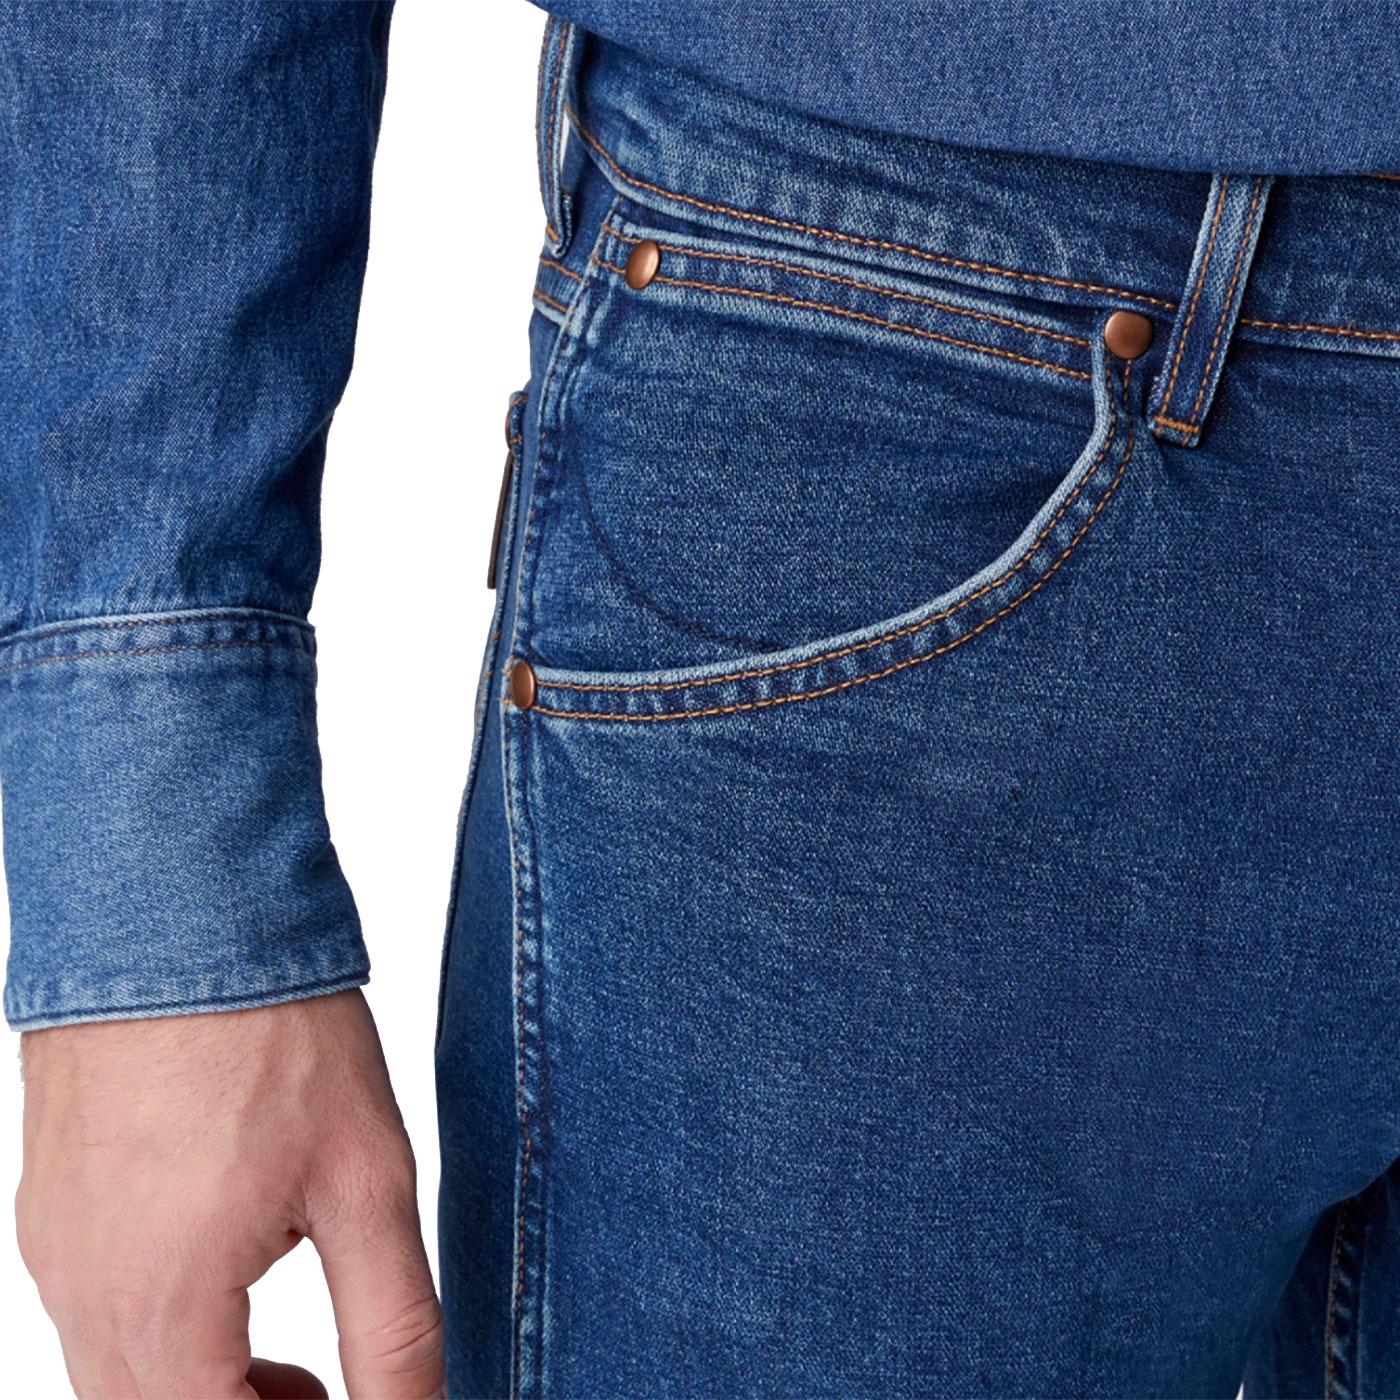 WRANGLER '11MWZ' Slim Western Jeans in 6 Month Wash